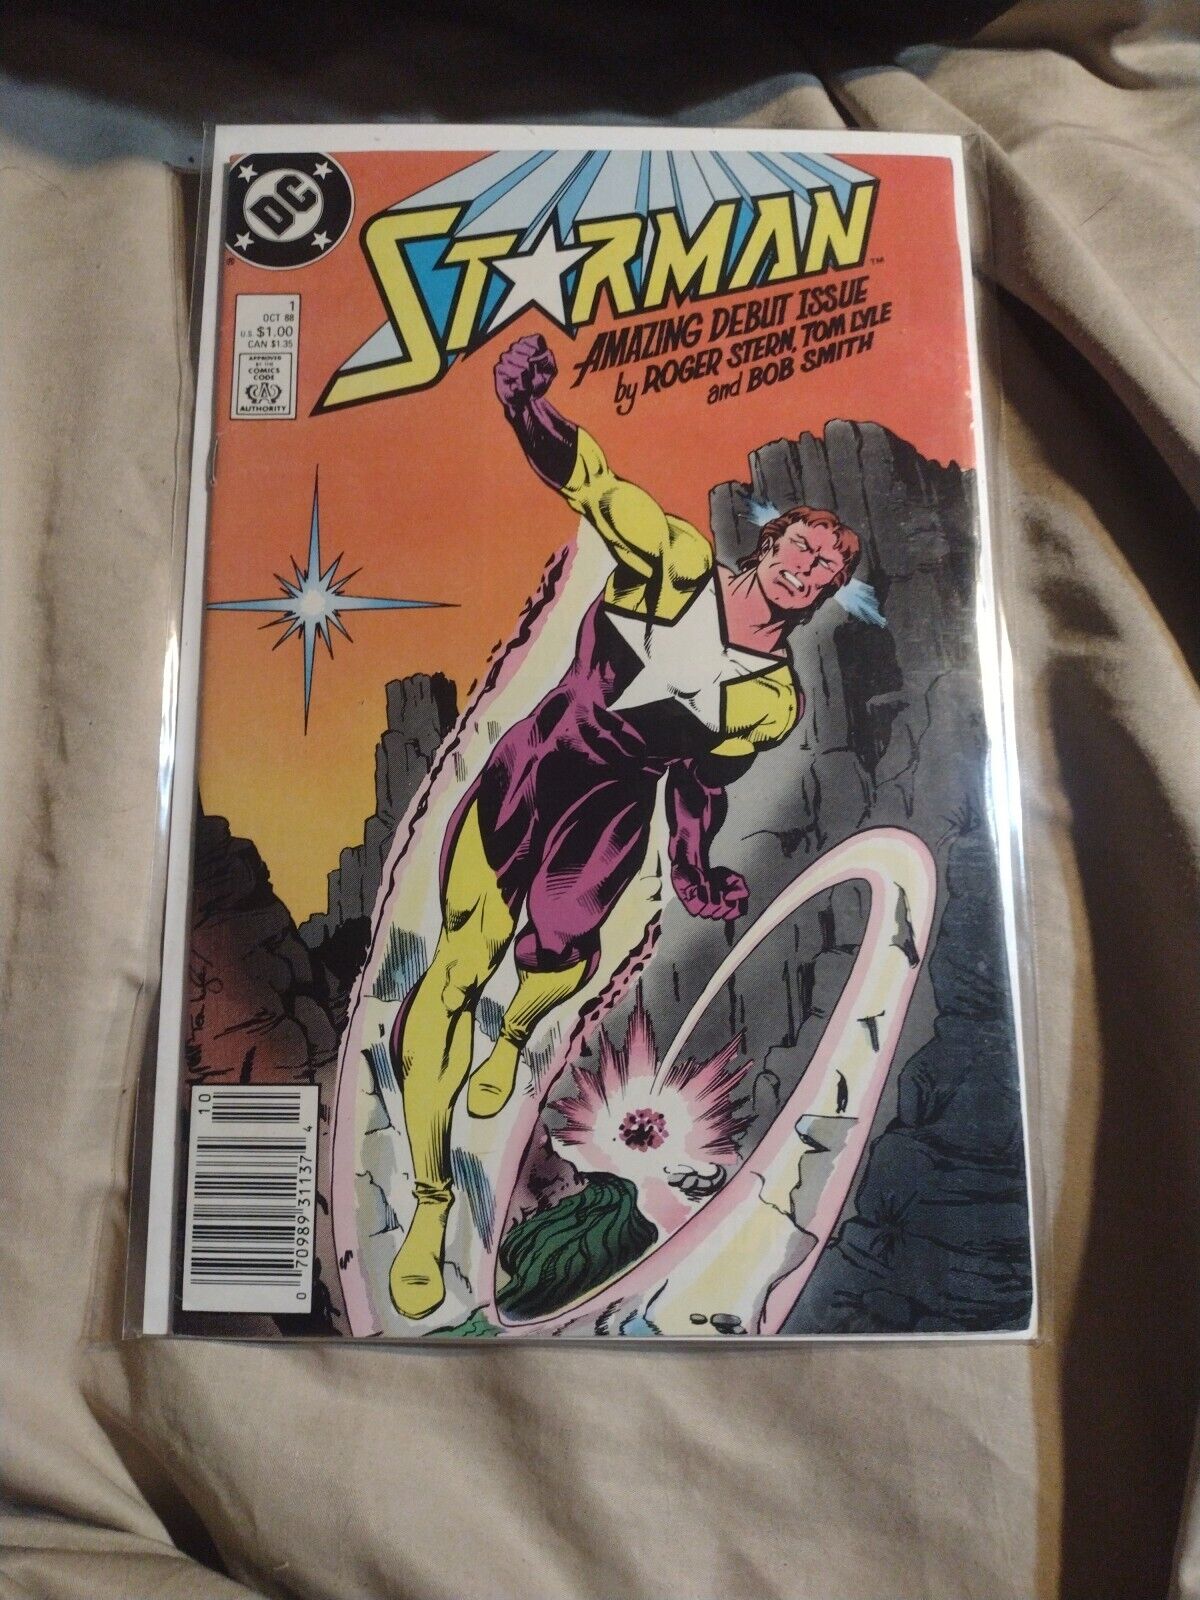 Starman #1 (Oct 1988, DC)